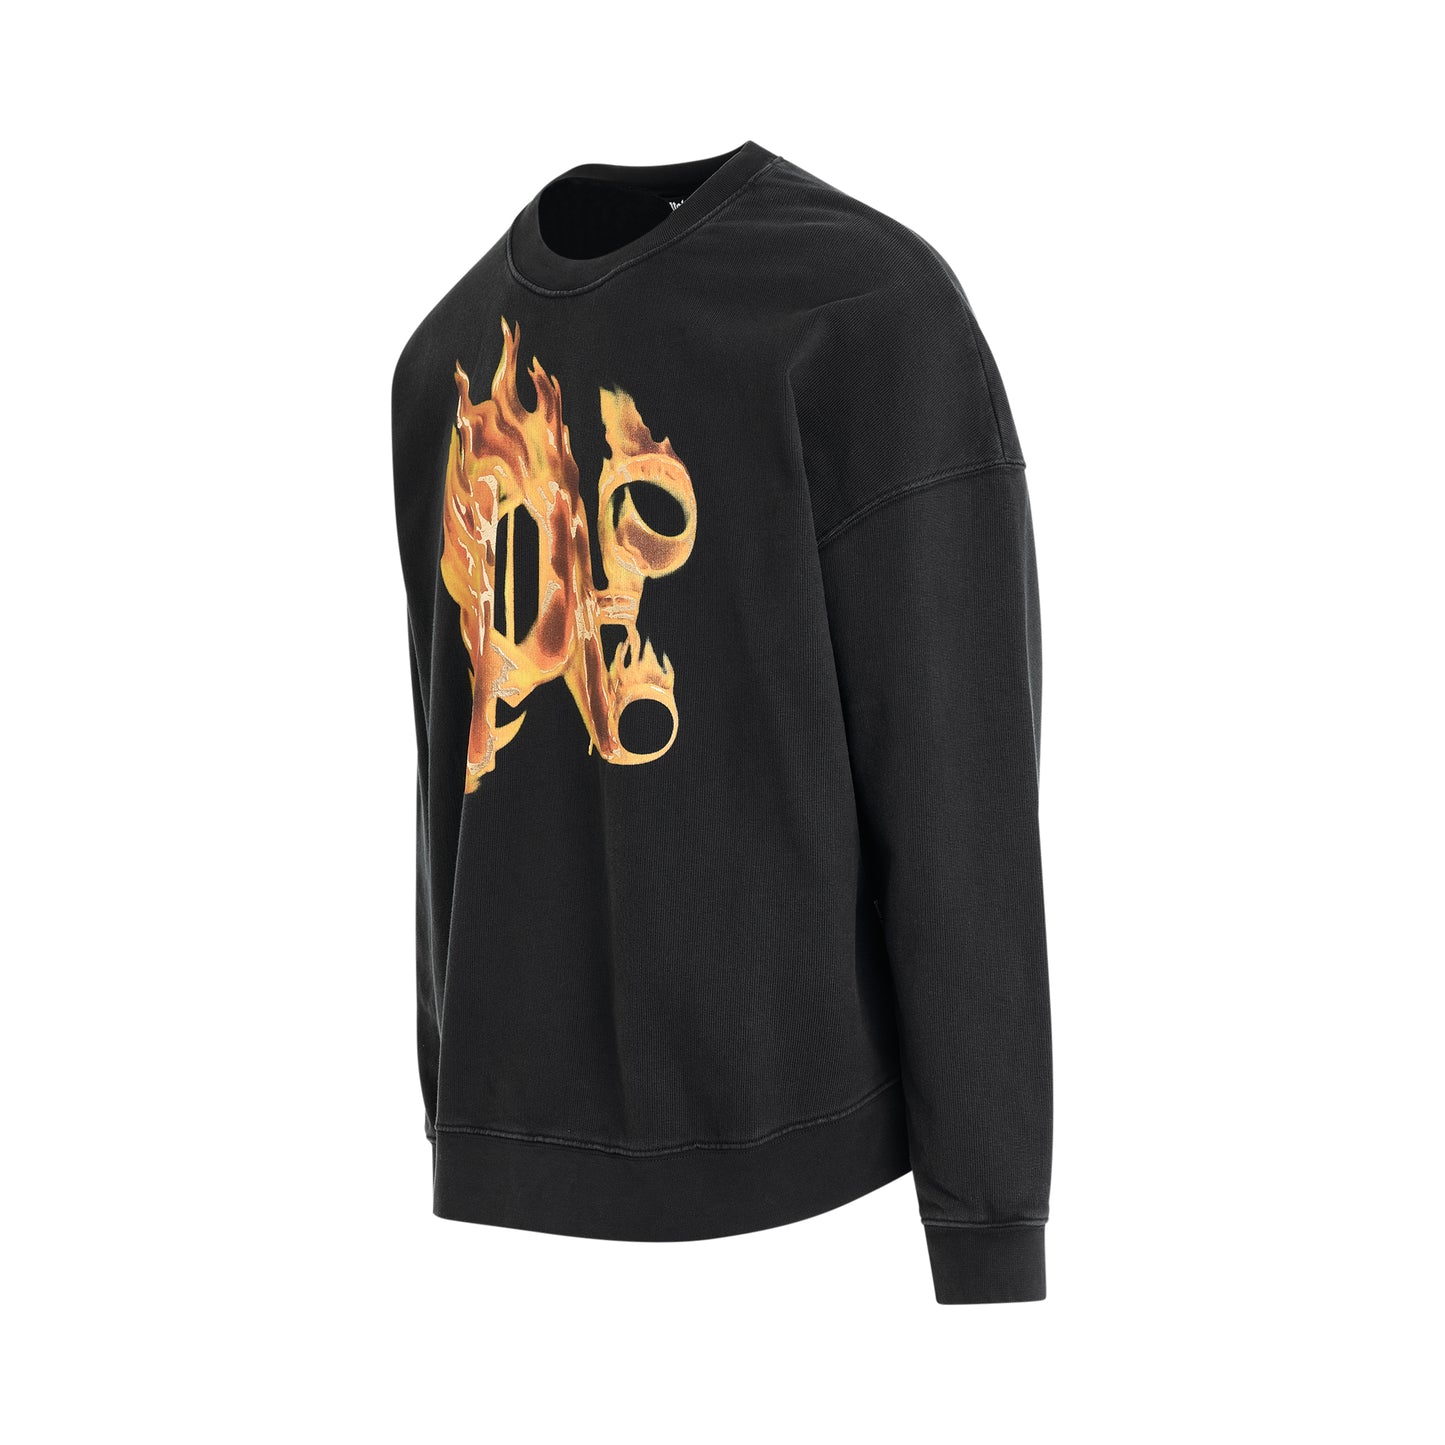 Burning Monogram Sweatshirt in Black/Gold